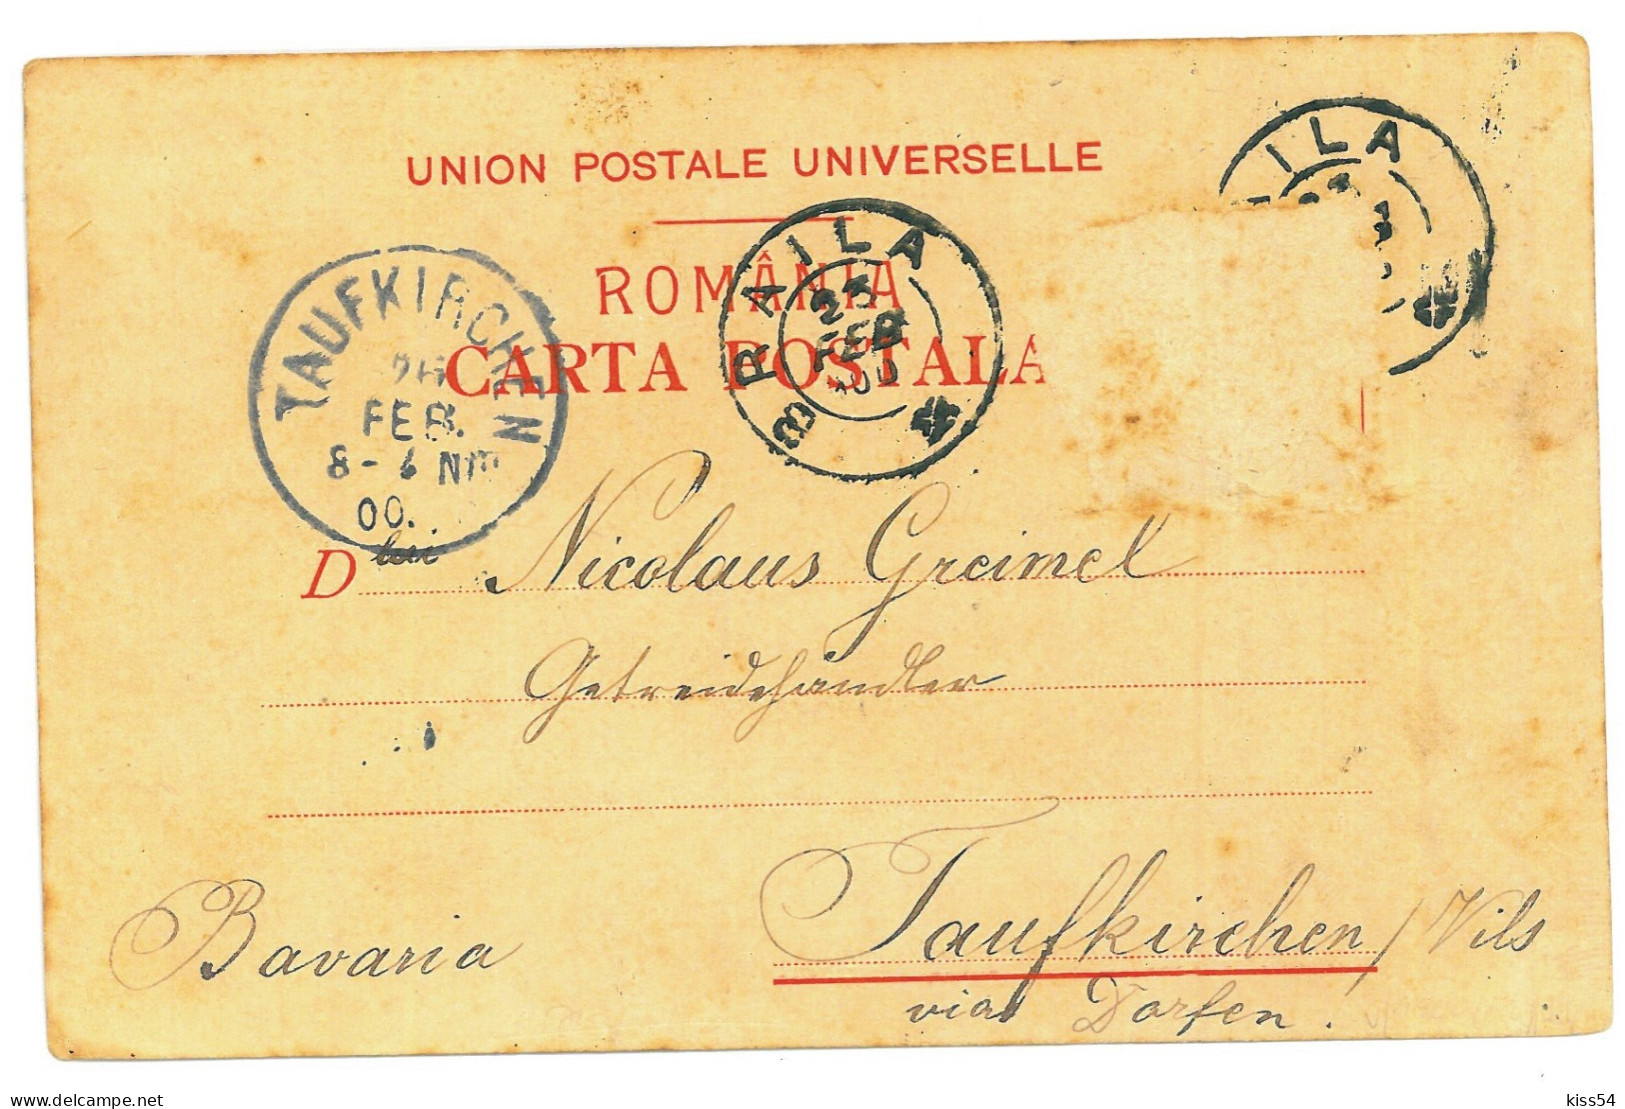 RO 83 - 20284 ETHNIC, Family, Litho, Romania - Old Postcard - Used - 1900 - Romania